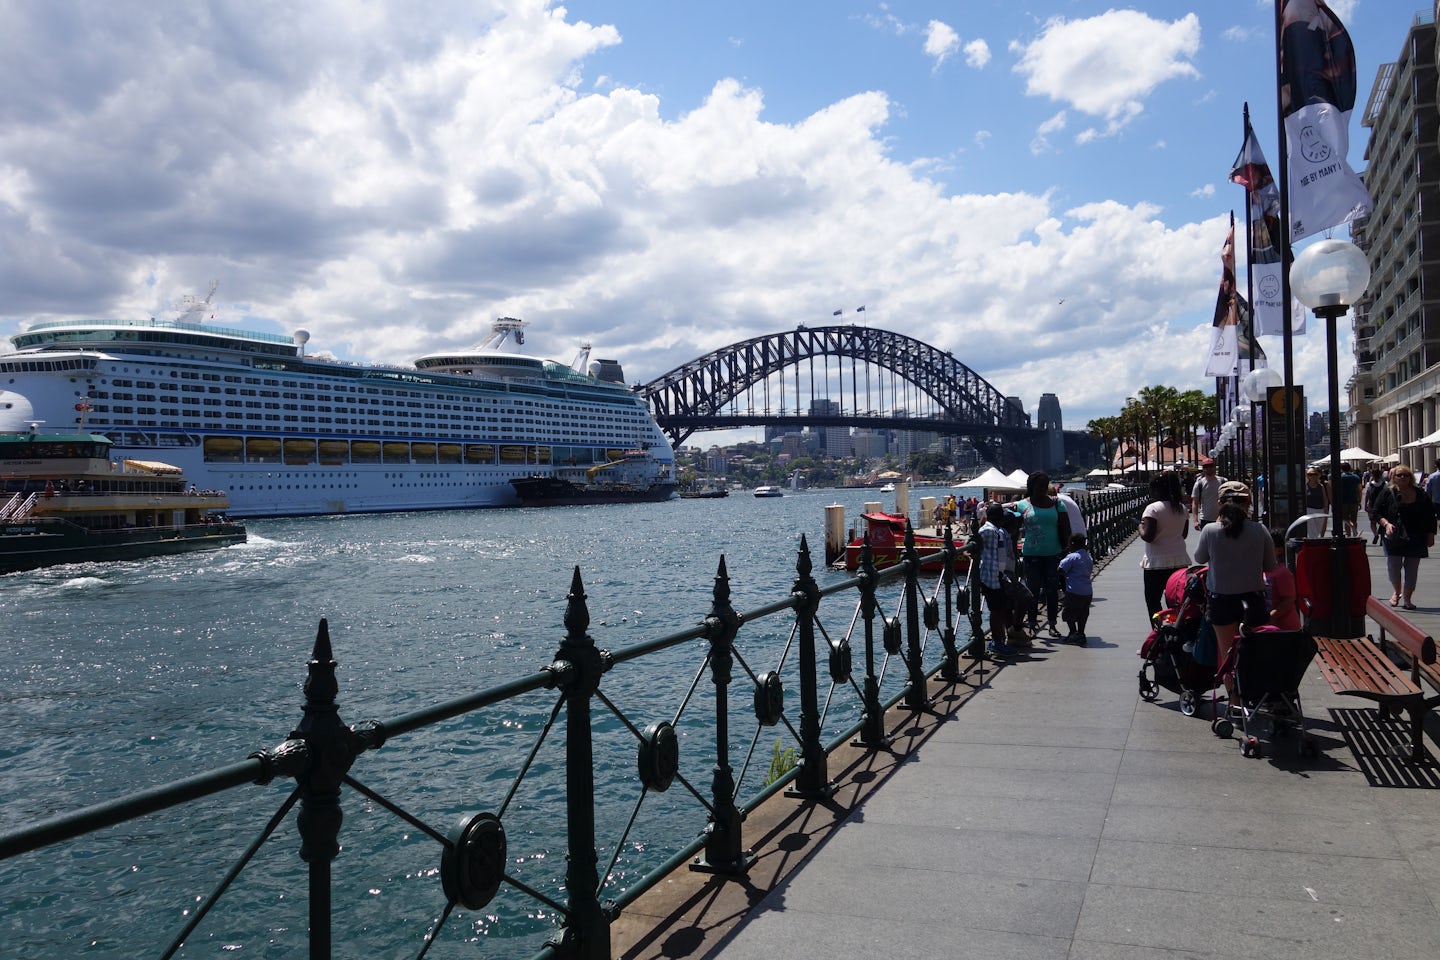 Celebrity Solstice in the port of Sydney